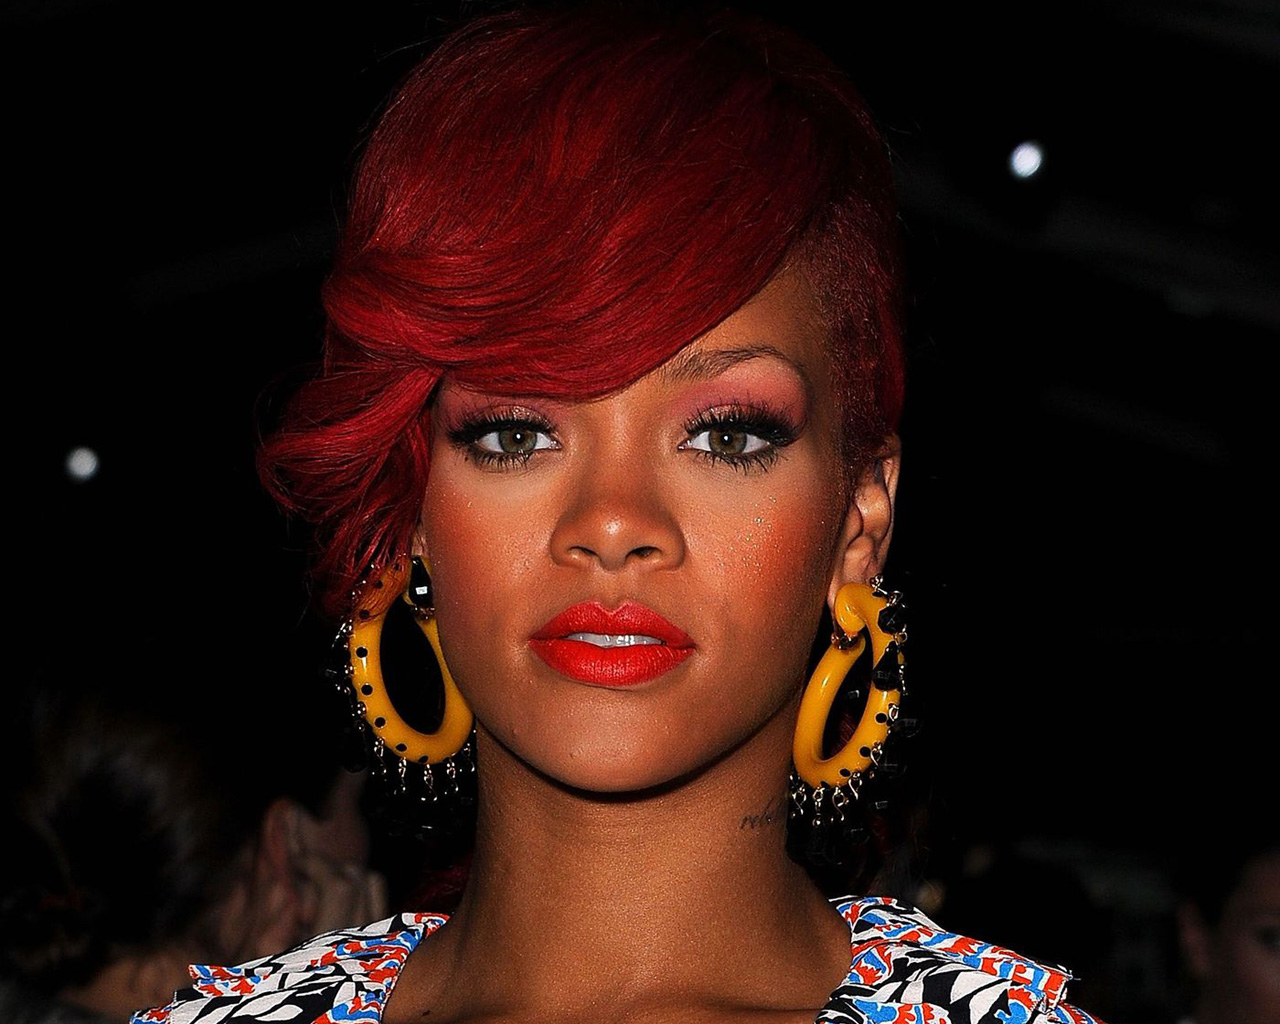 Rihanna Night